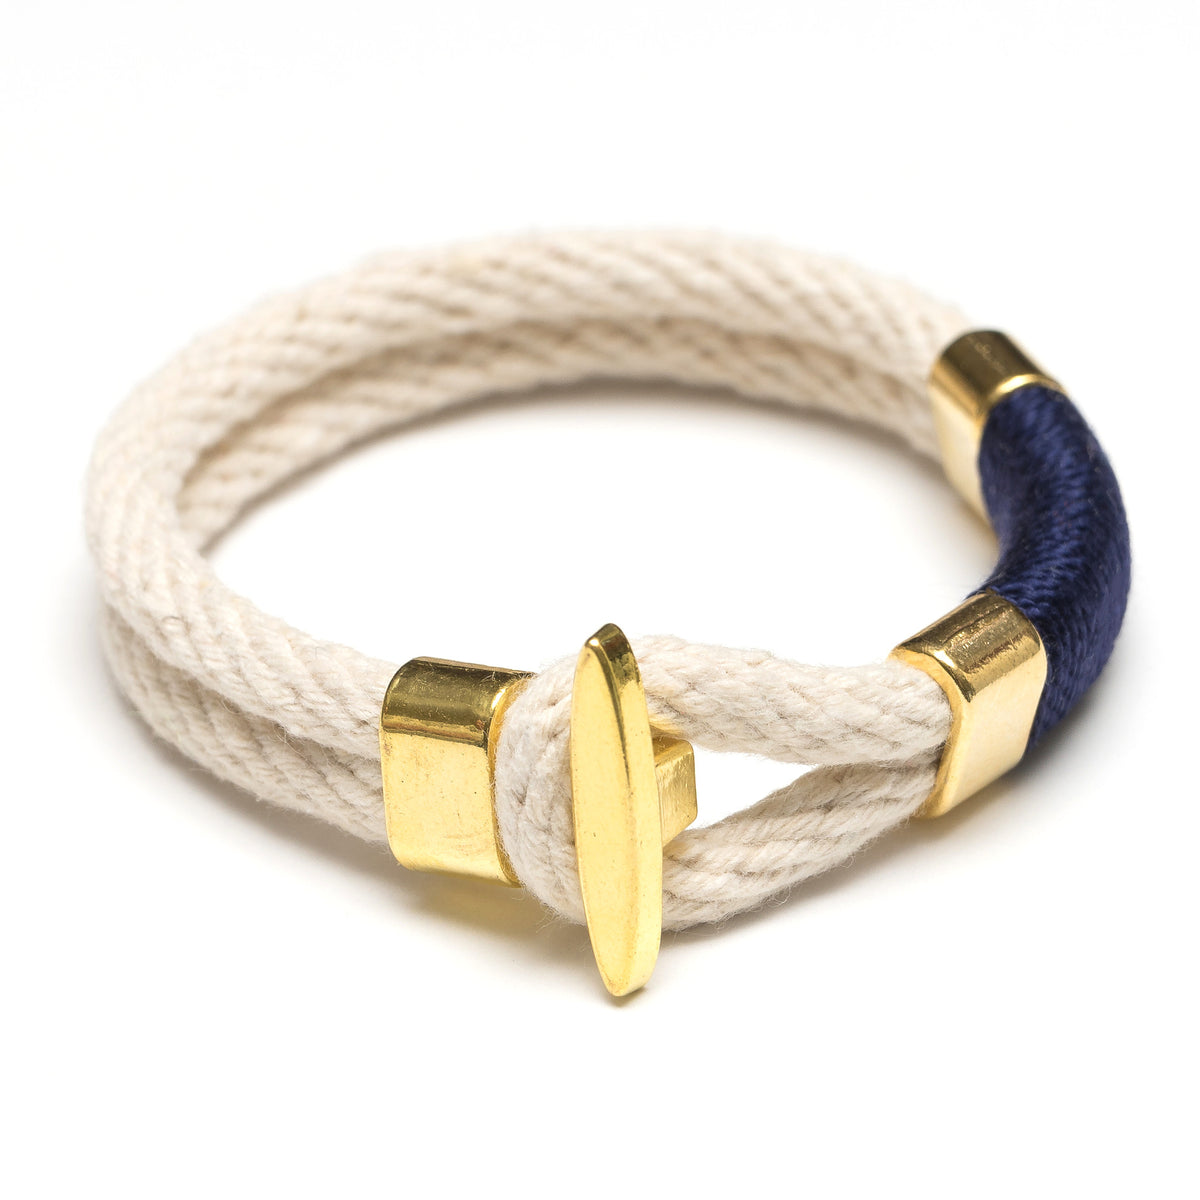 Allison Cole Jewelry - Cambridge Bracelet Ivory/ Navy/ Gold